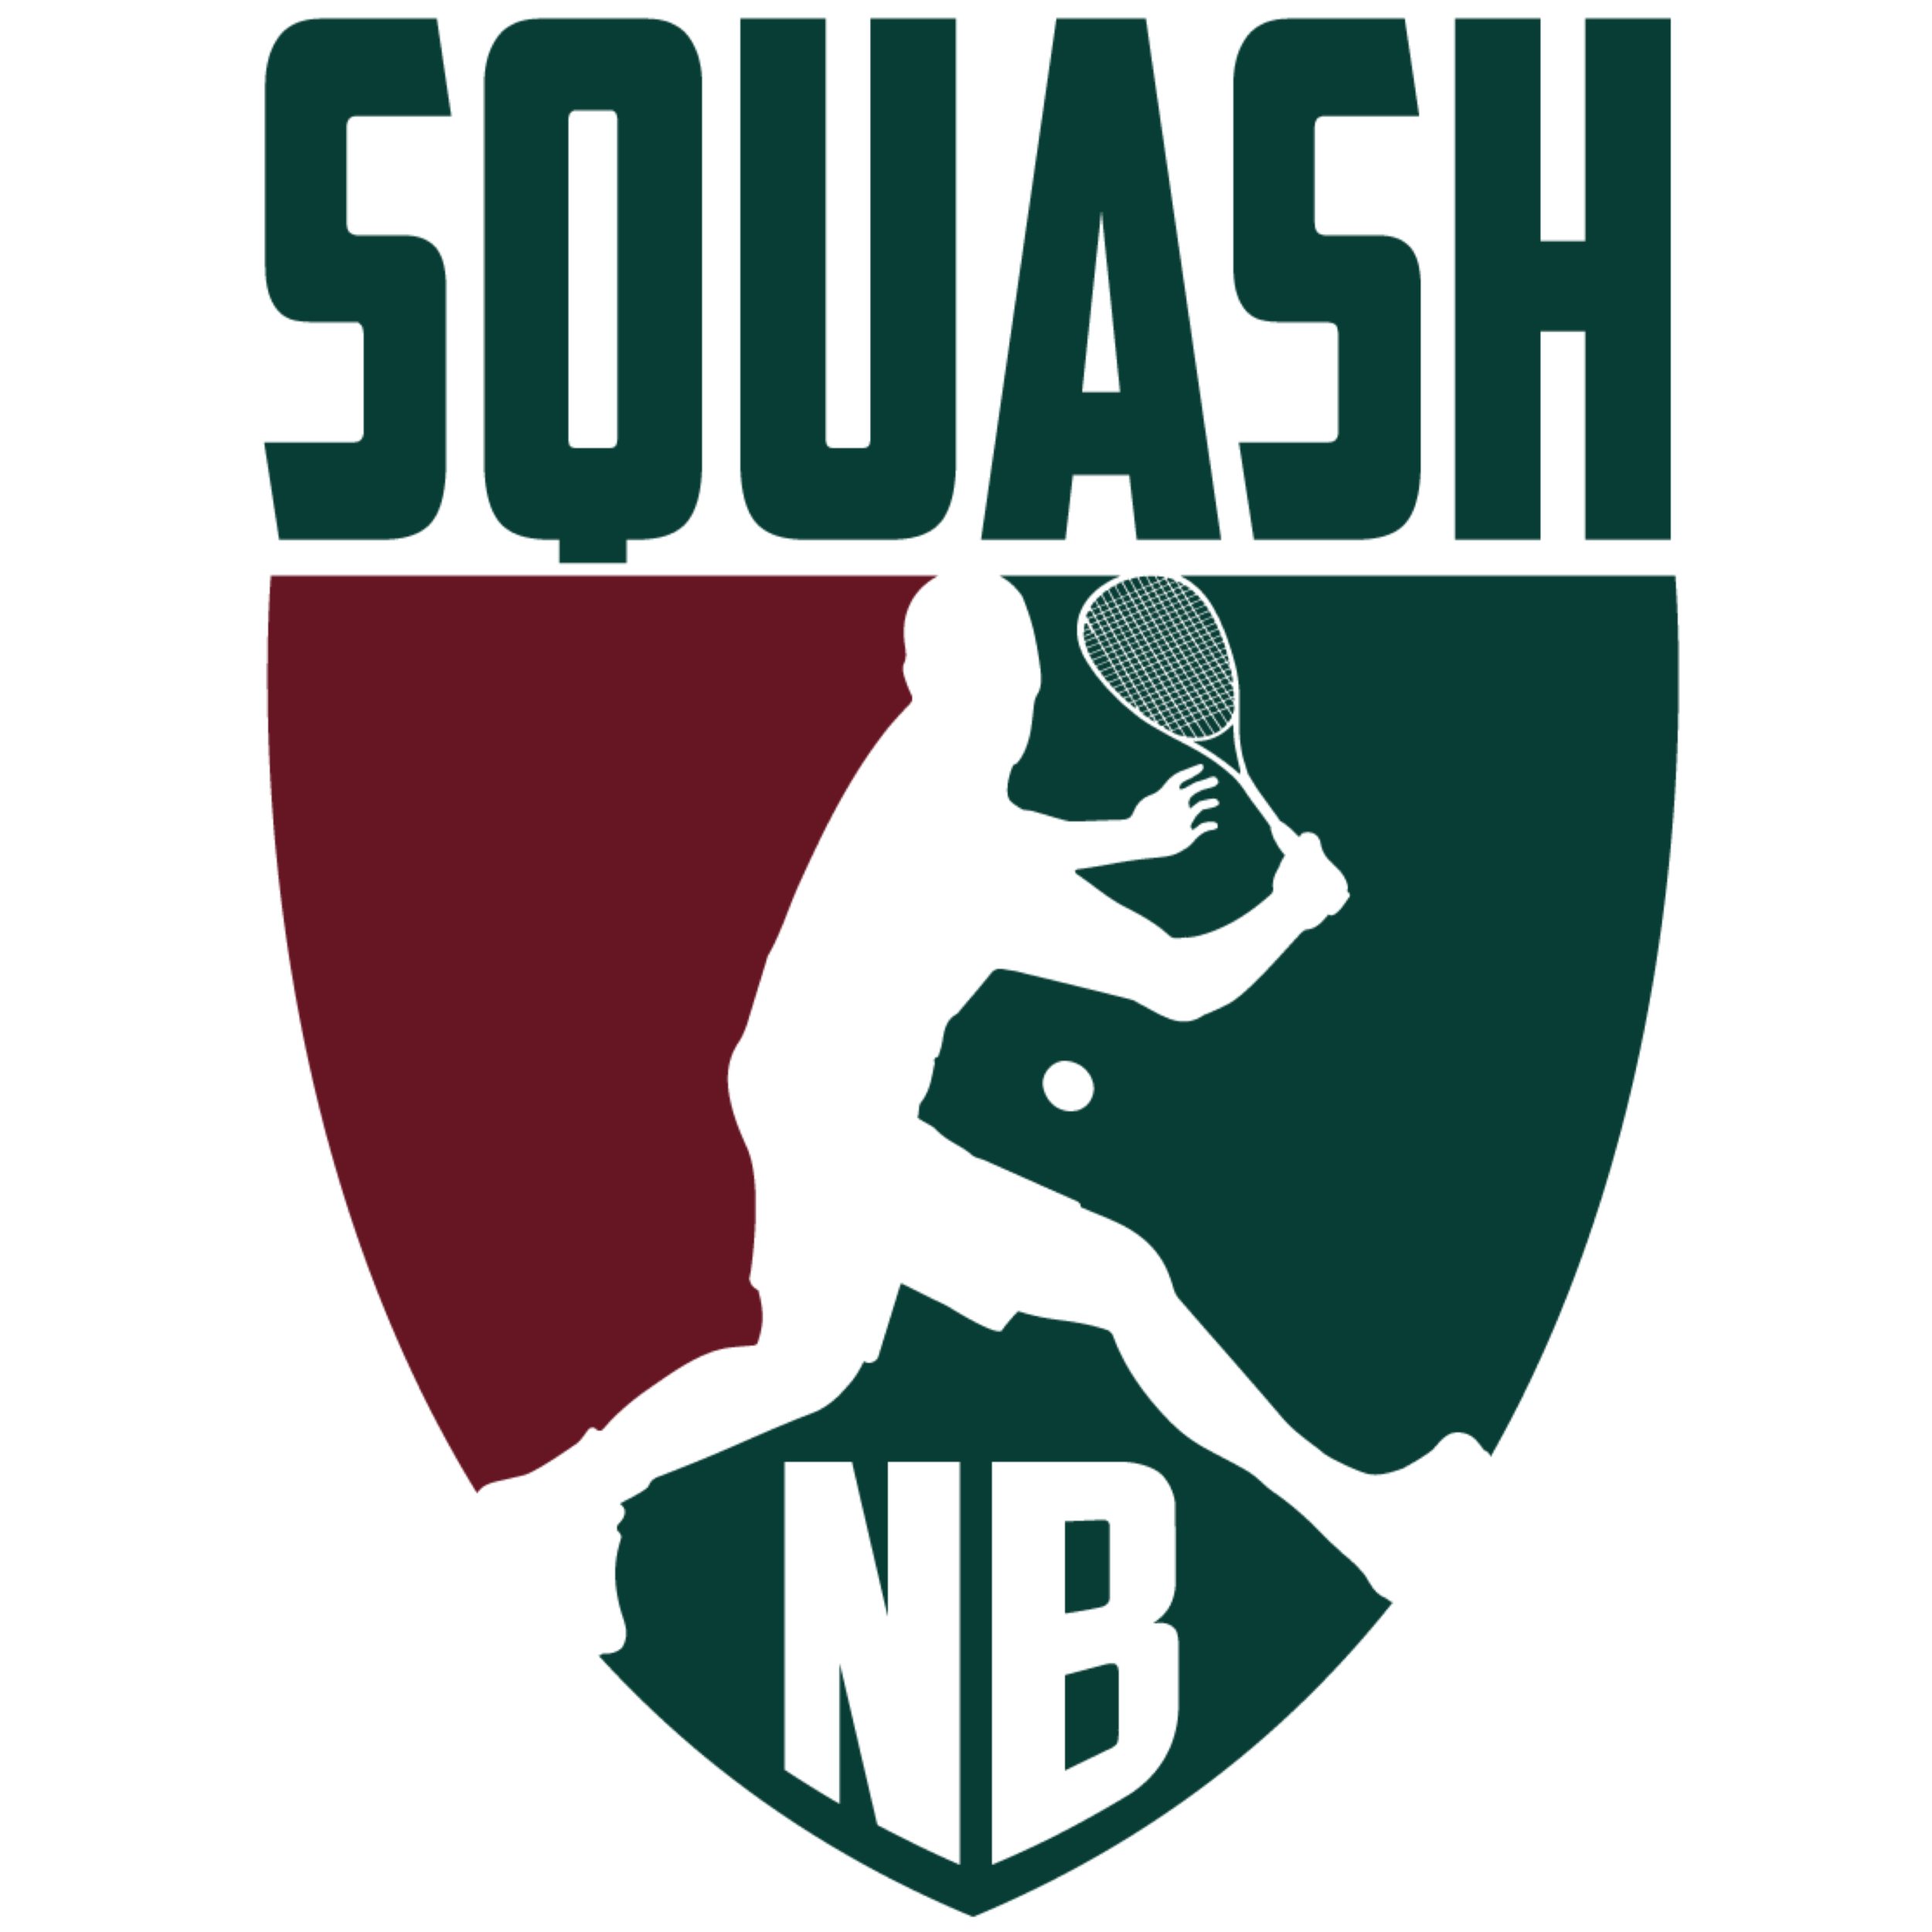 Squash NB